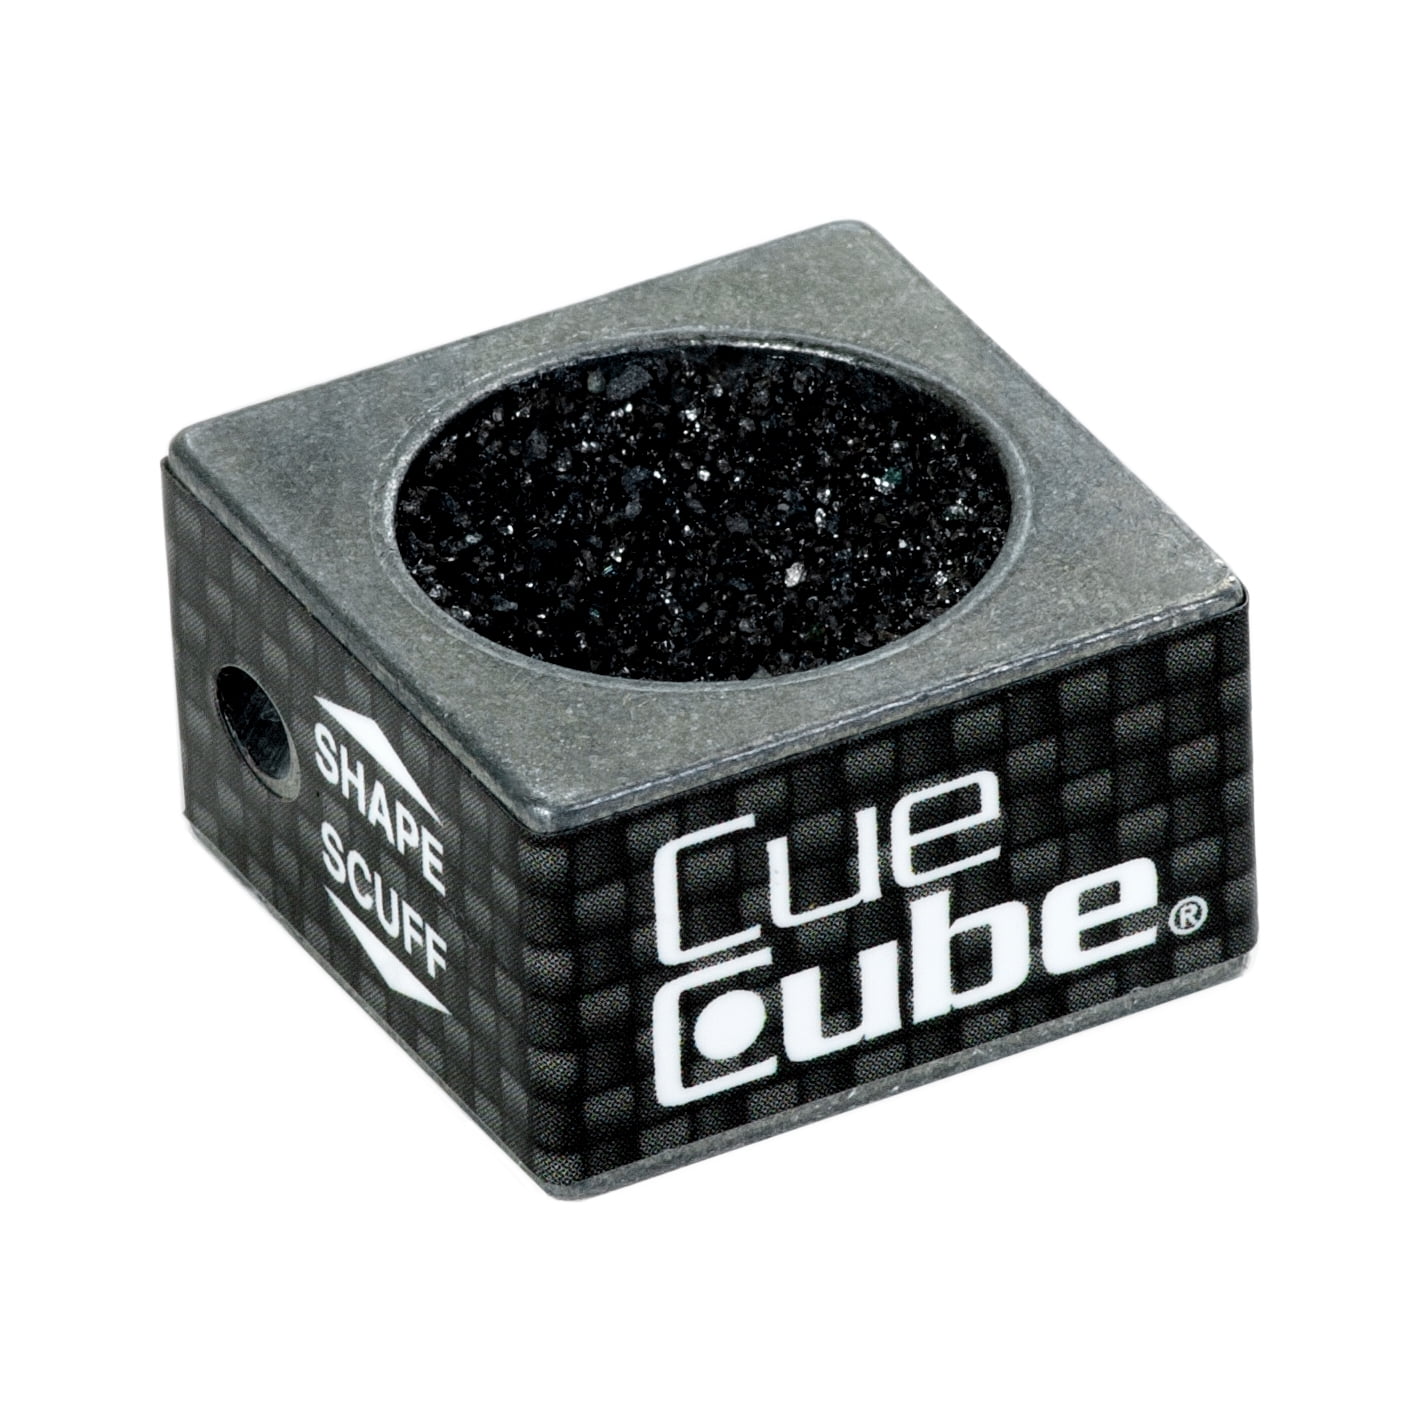 1* Cube-Billiards Cue Tip Tool Shaper Scuffer/Aerator/Nickel/Dime/Penny Radius 